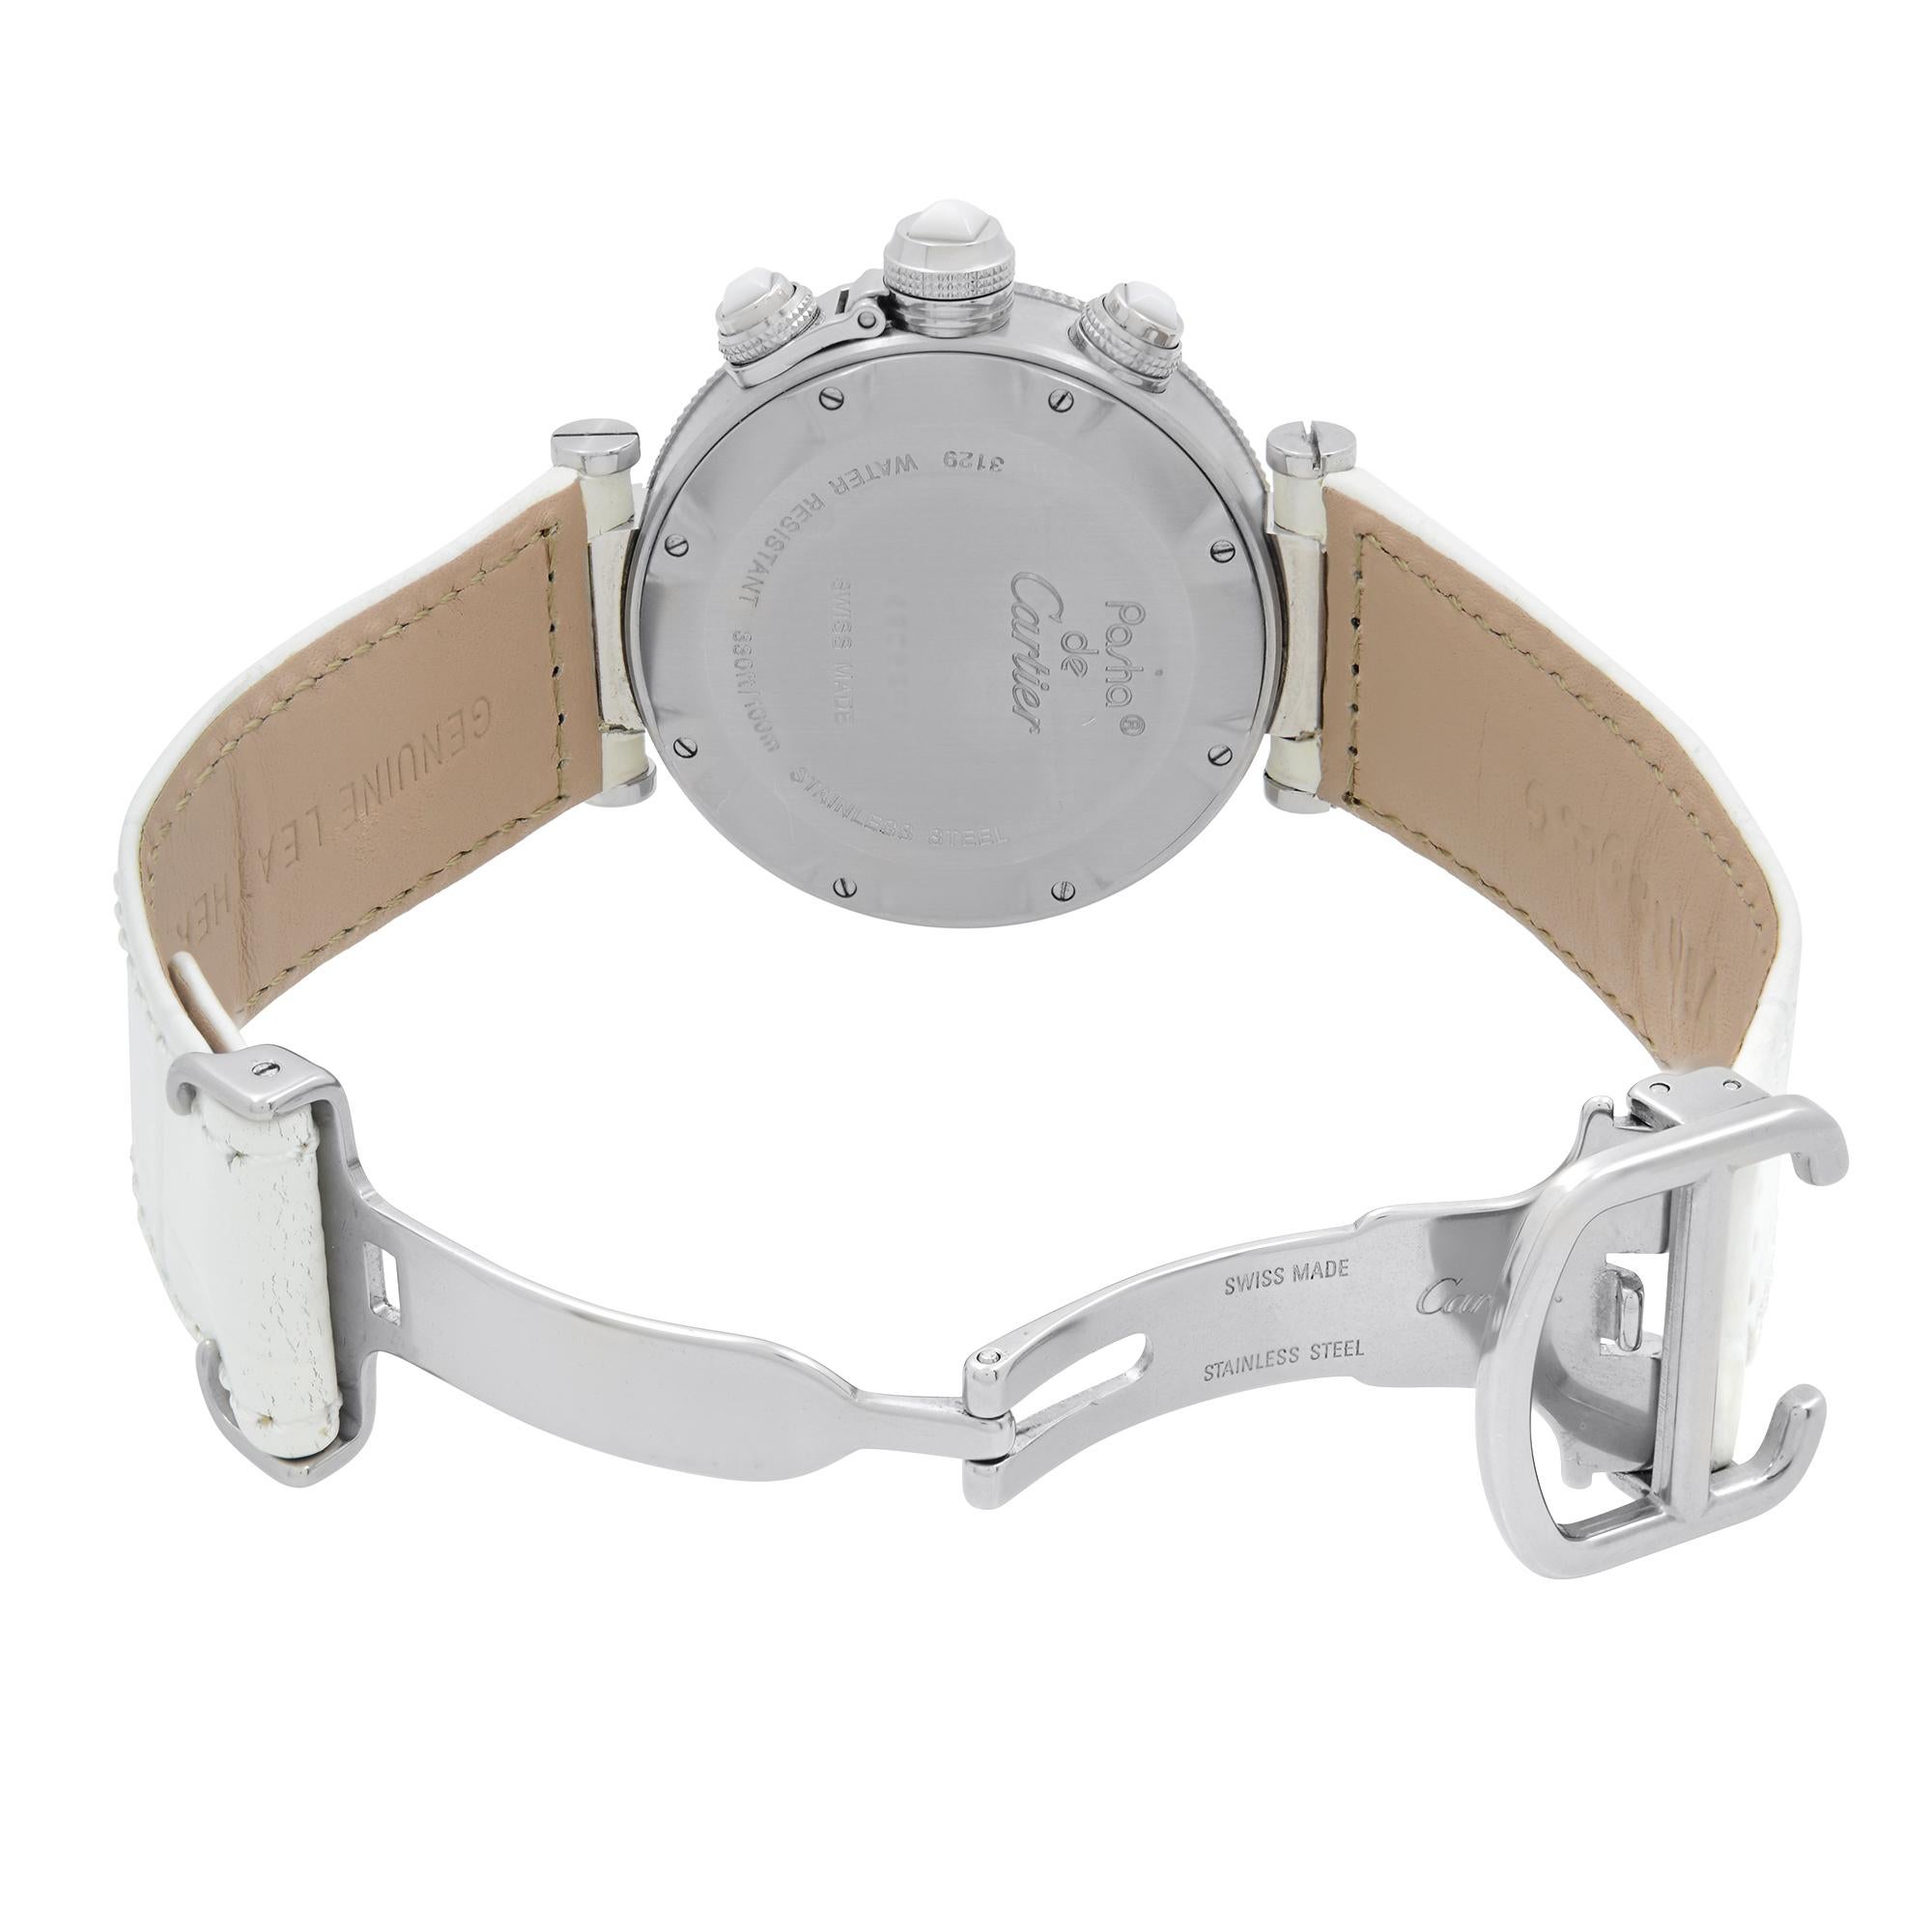 Cartier Pasha Seatimer Steel Silver Dial Quartz Unisex Watch W3140005 2